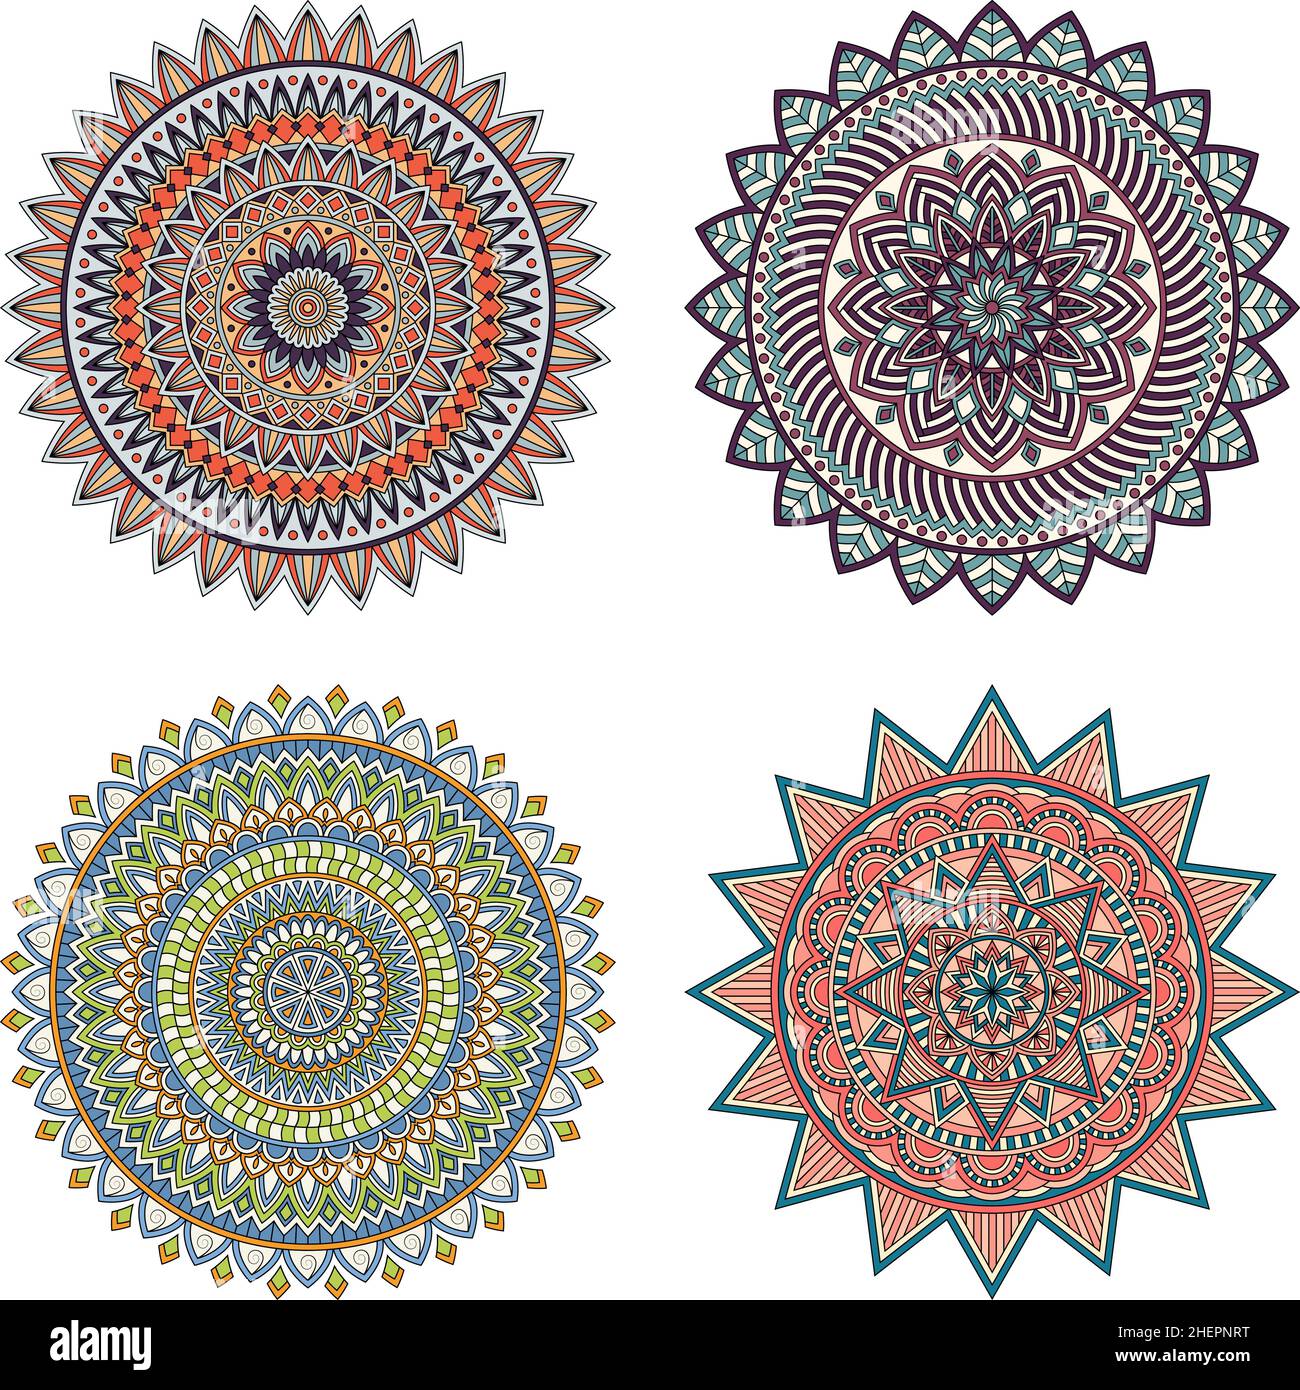 Desenho de Mandala flor de lótus para Colorir - Colorir.com  Dibujos con  mandalas, Tatuajes mandalas, Mandalas para colorear